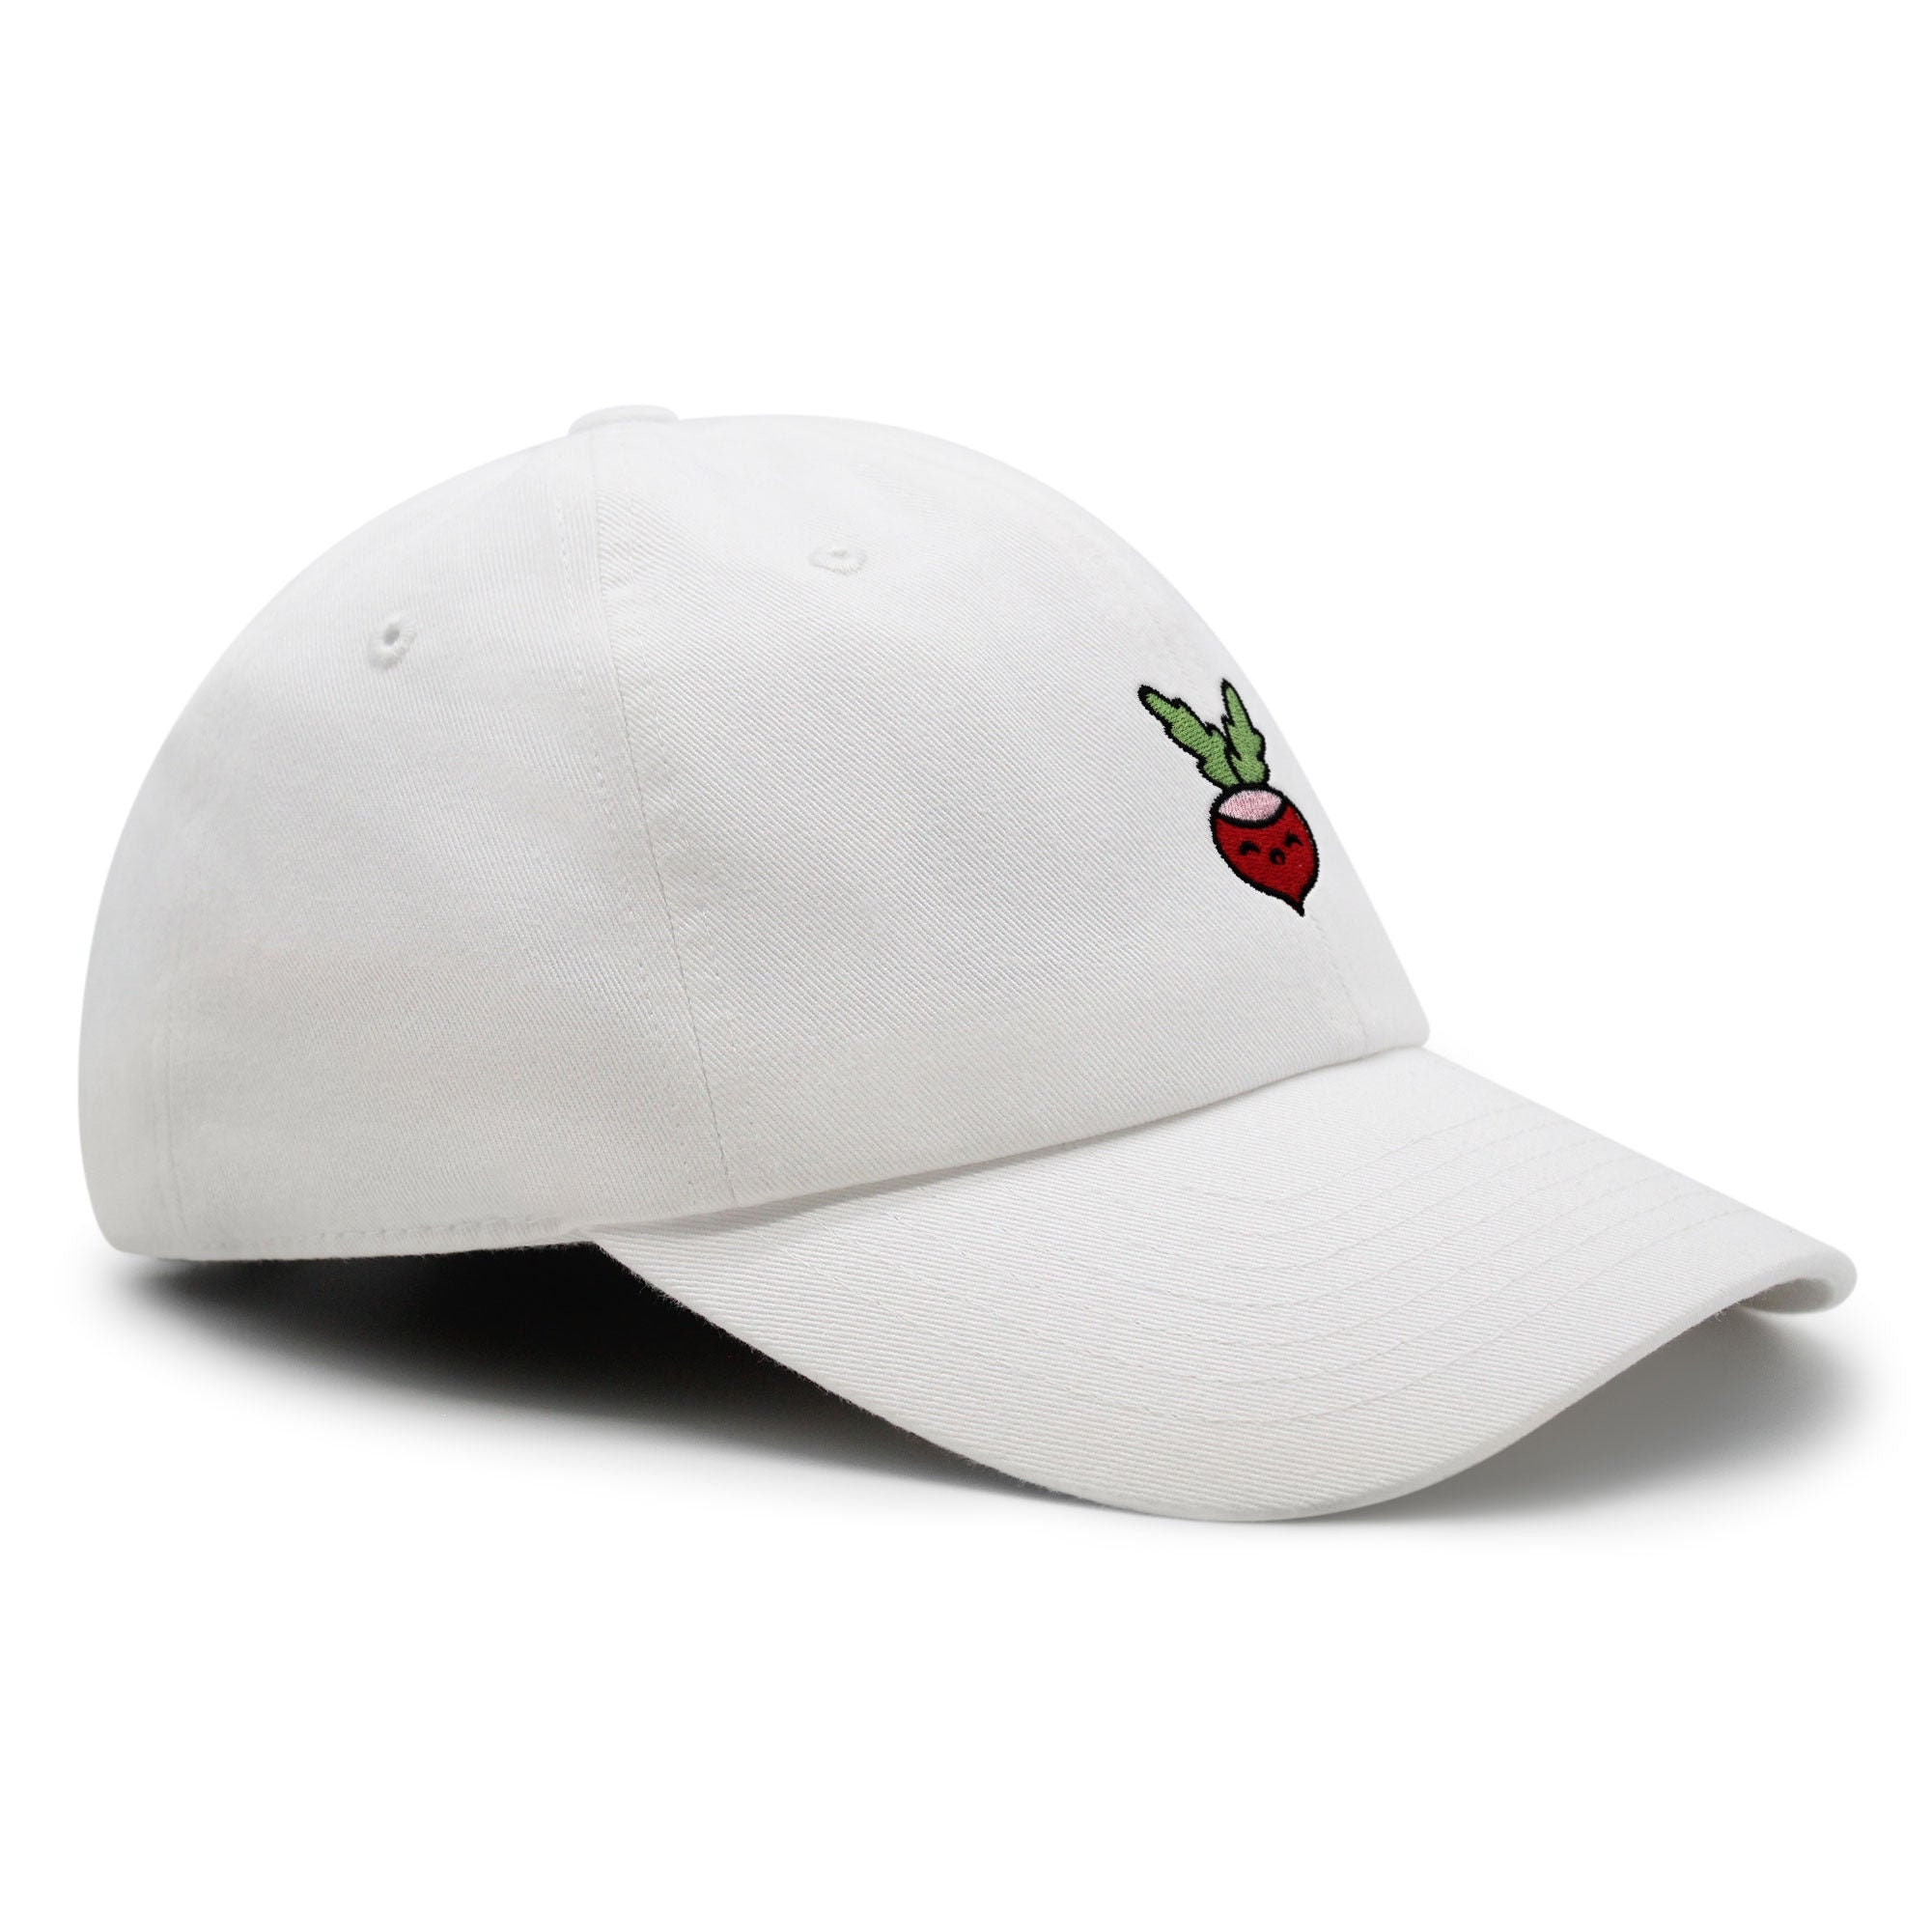 Radish Premium Dad Hat Embroidered Baseball Cap Vegan Vegetable Farmer